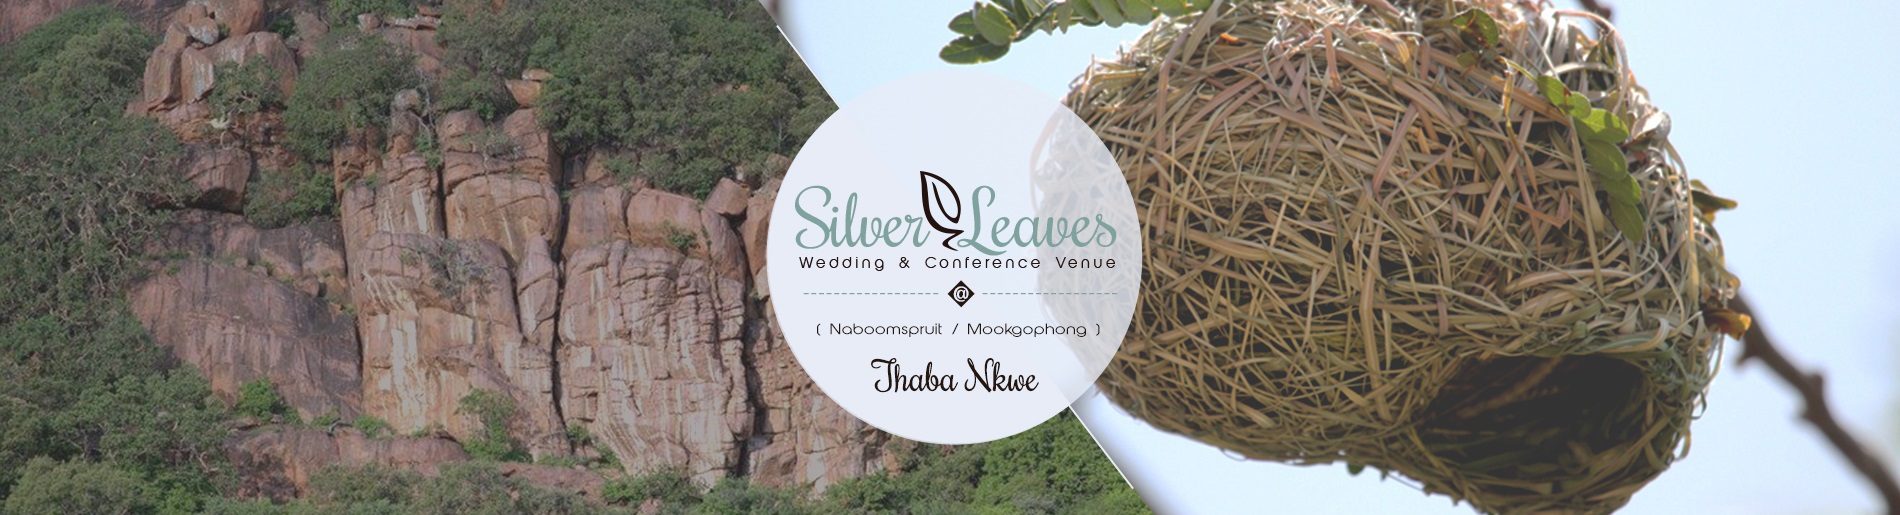 Silver Leaves Banner Blog 3